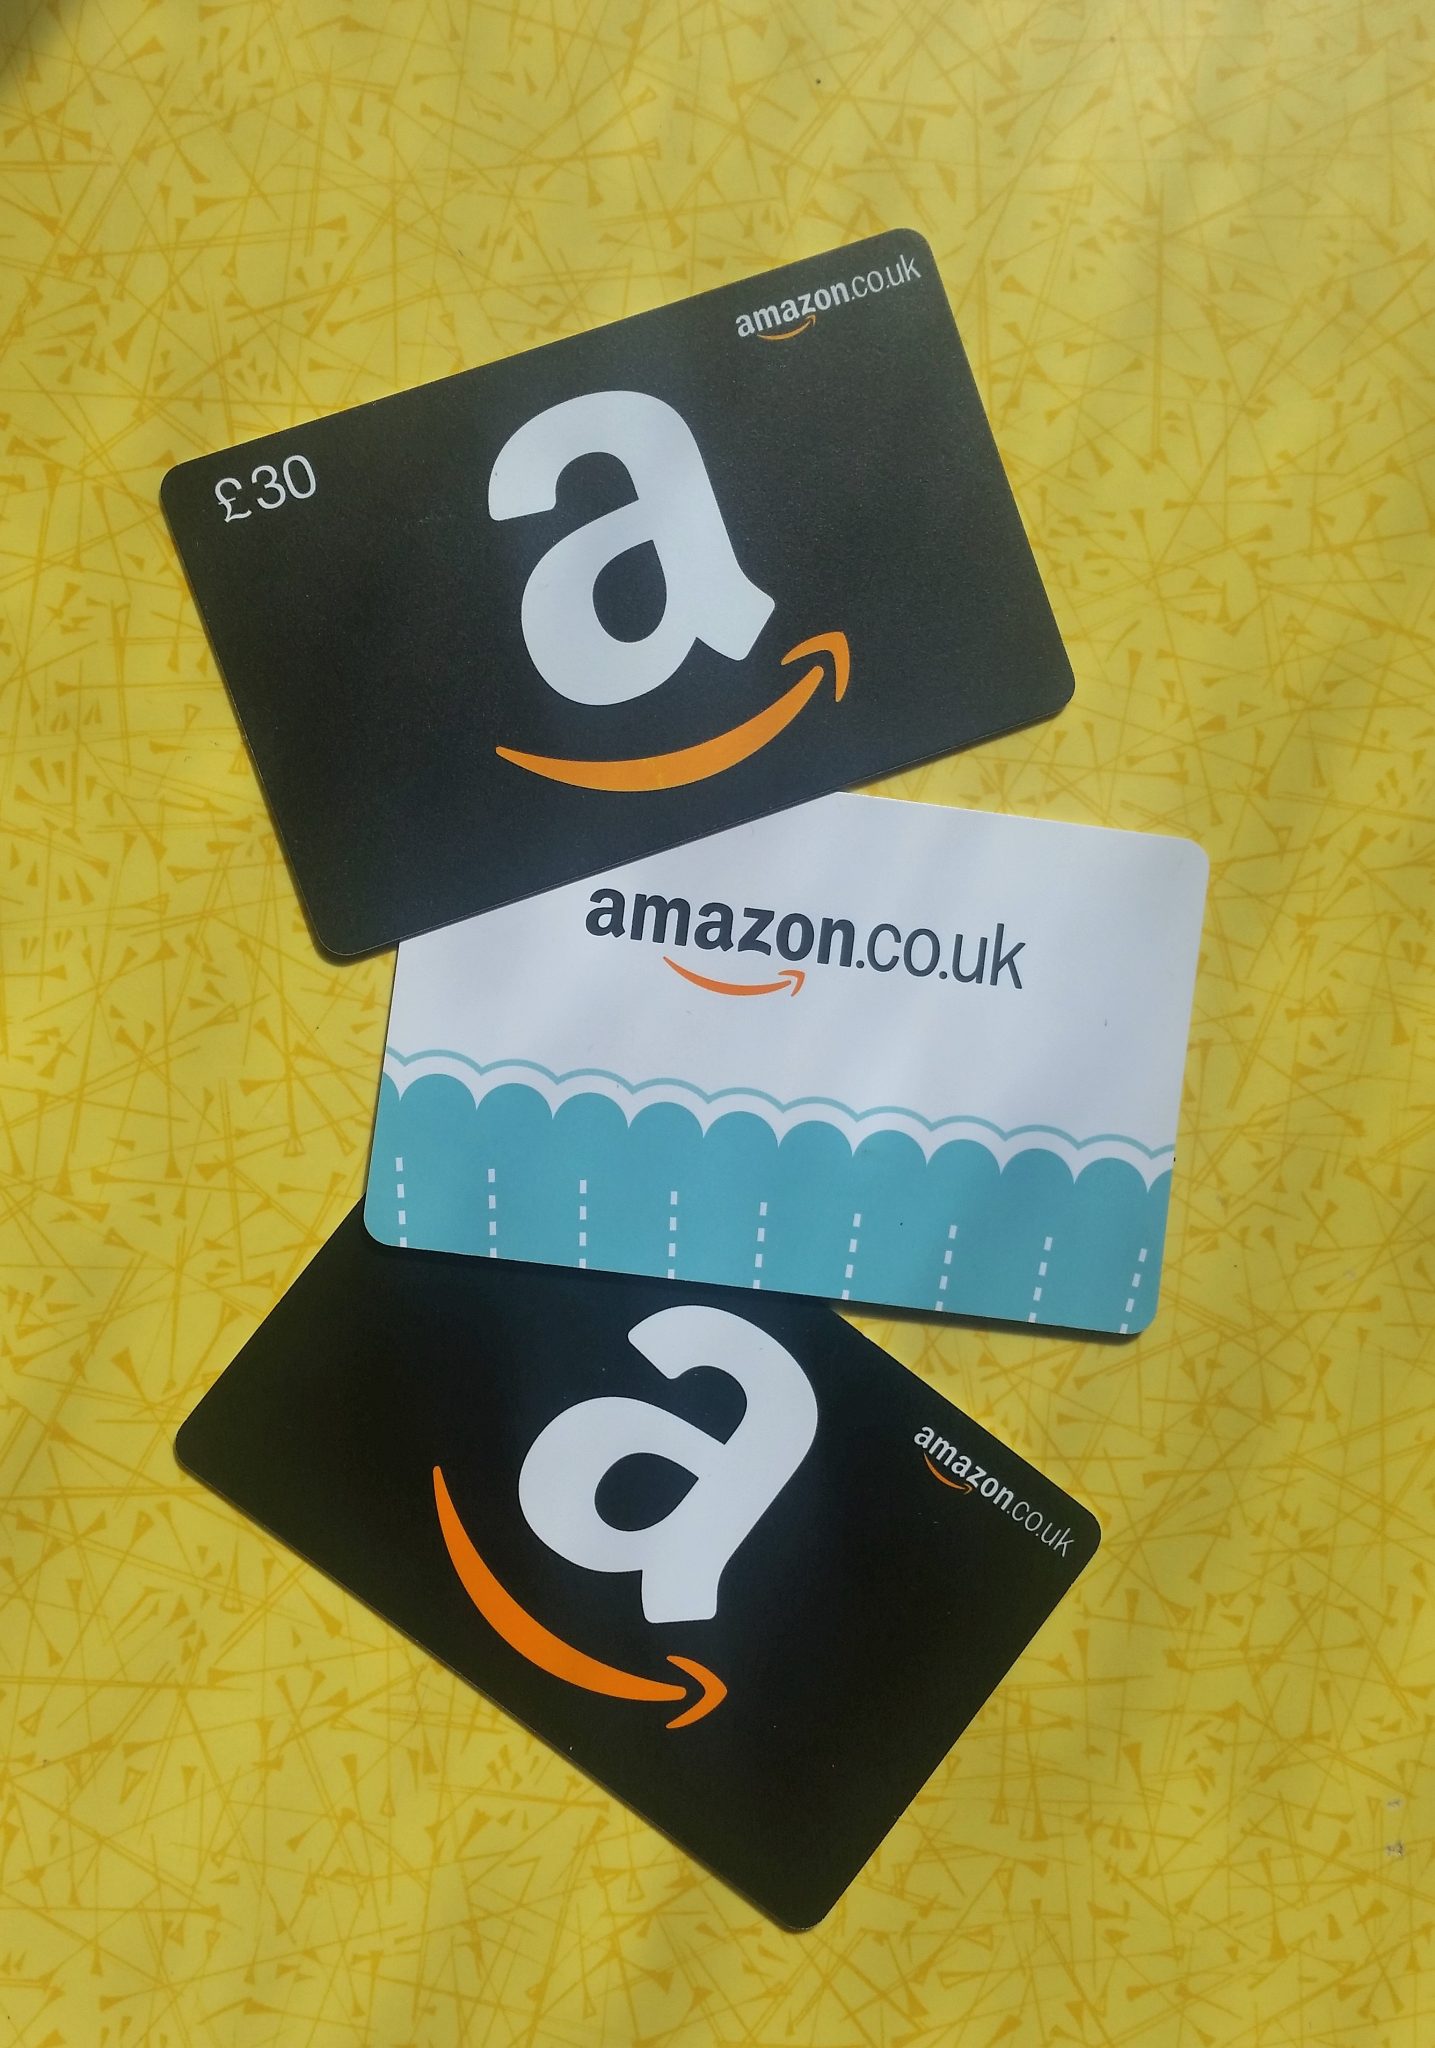 Amazon gift cards on yellow table